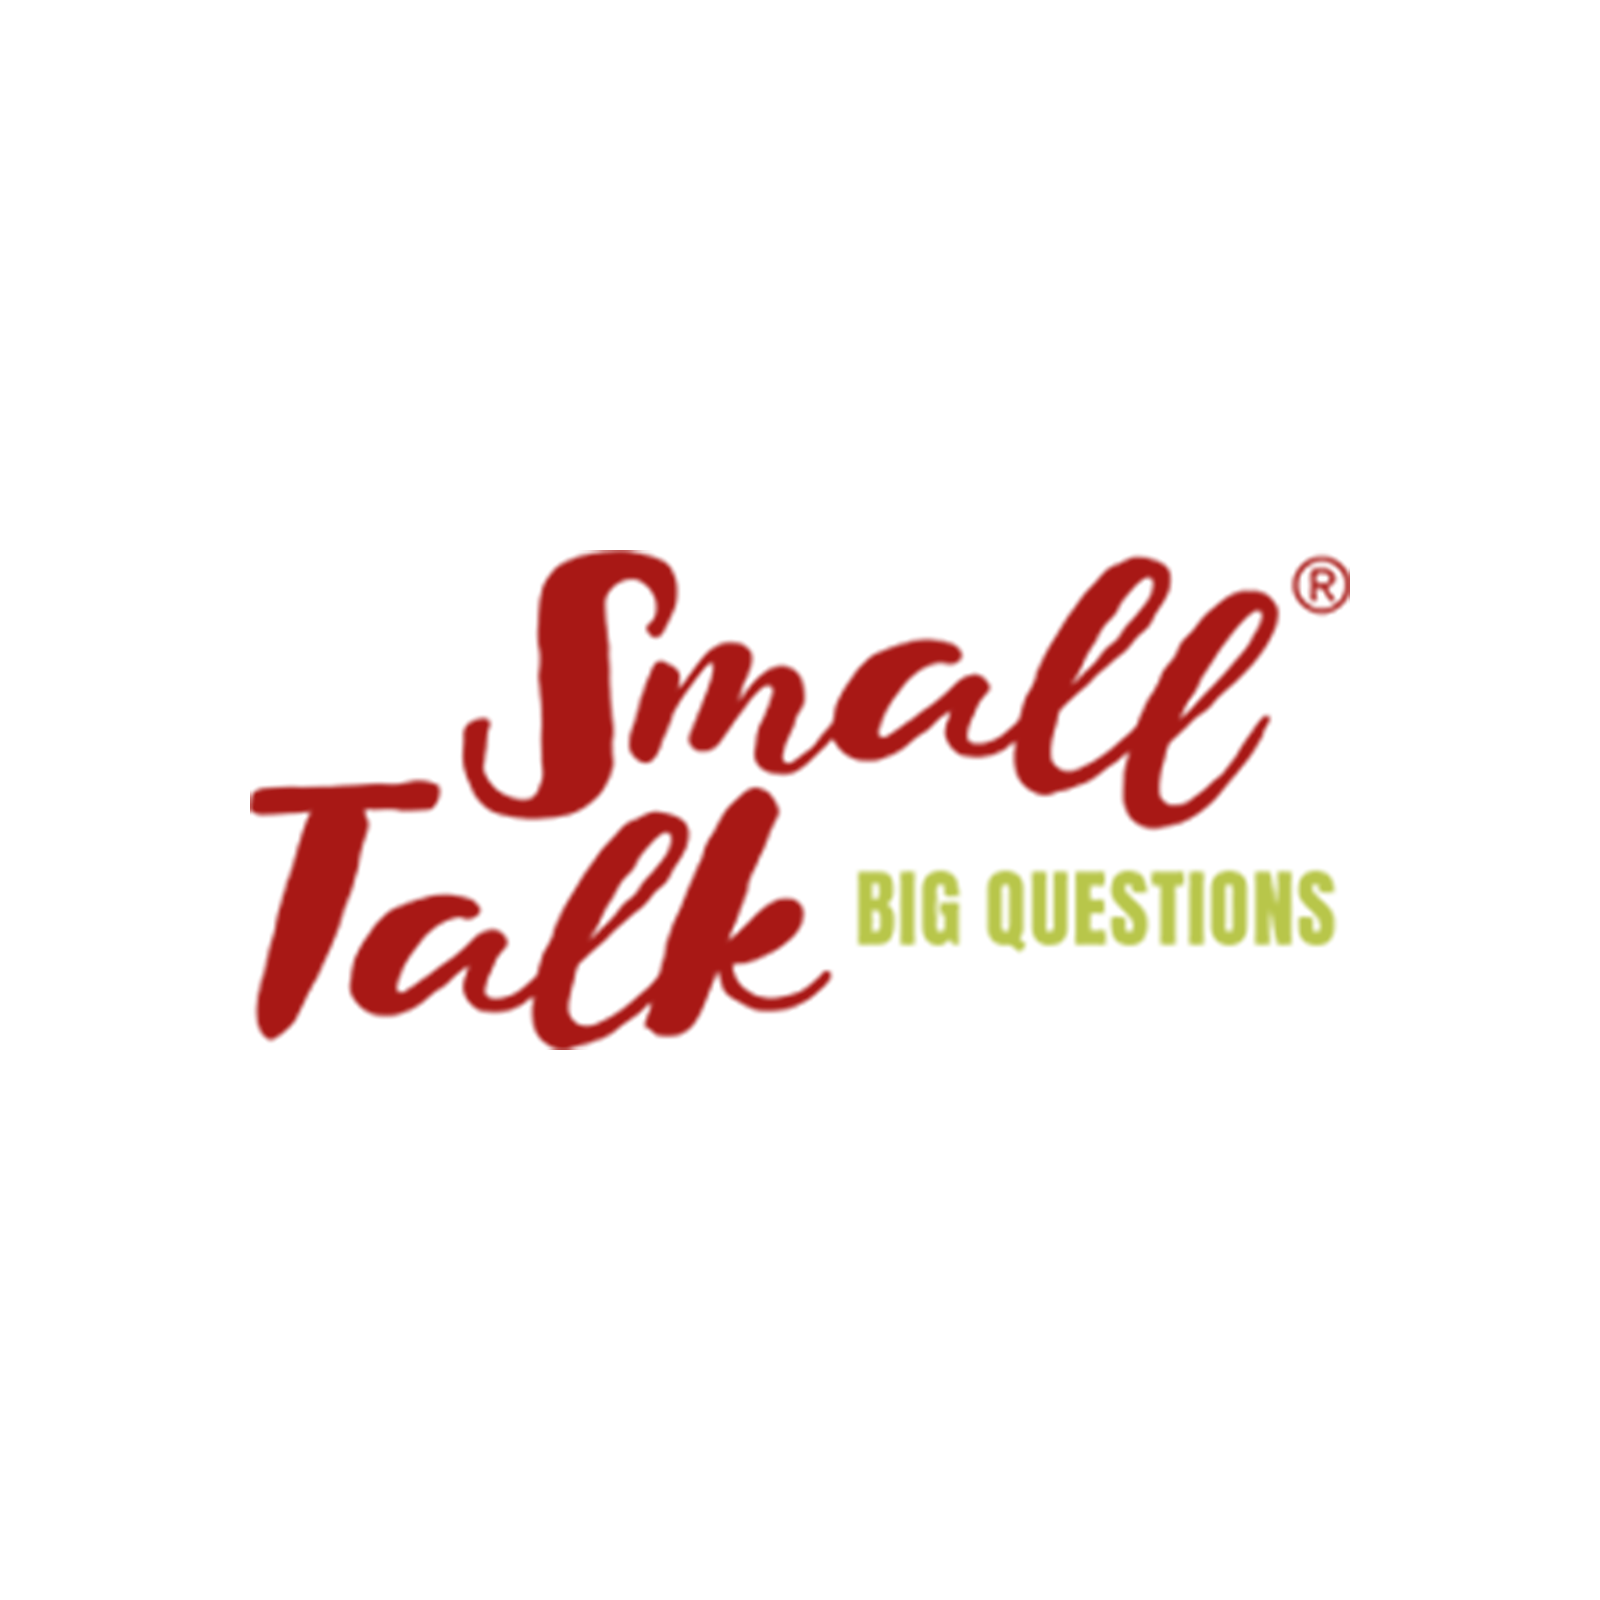 small talk - small talk big questions - samtalespil - parspil - selskabsspil - modernhouse